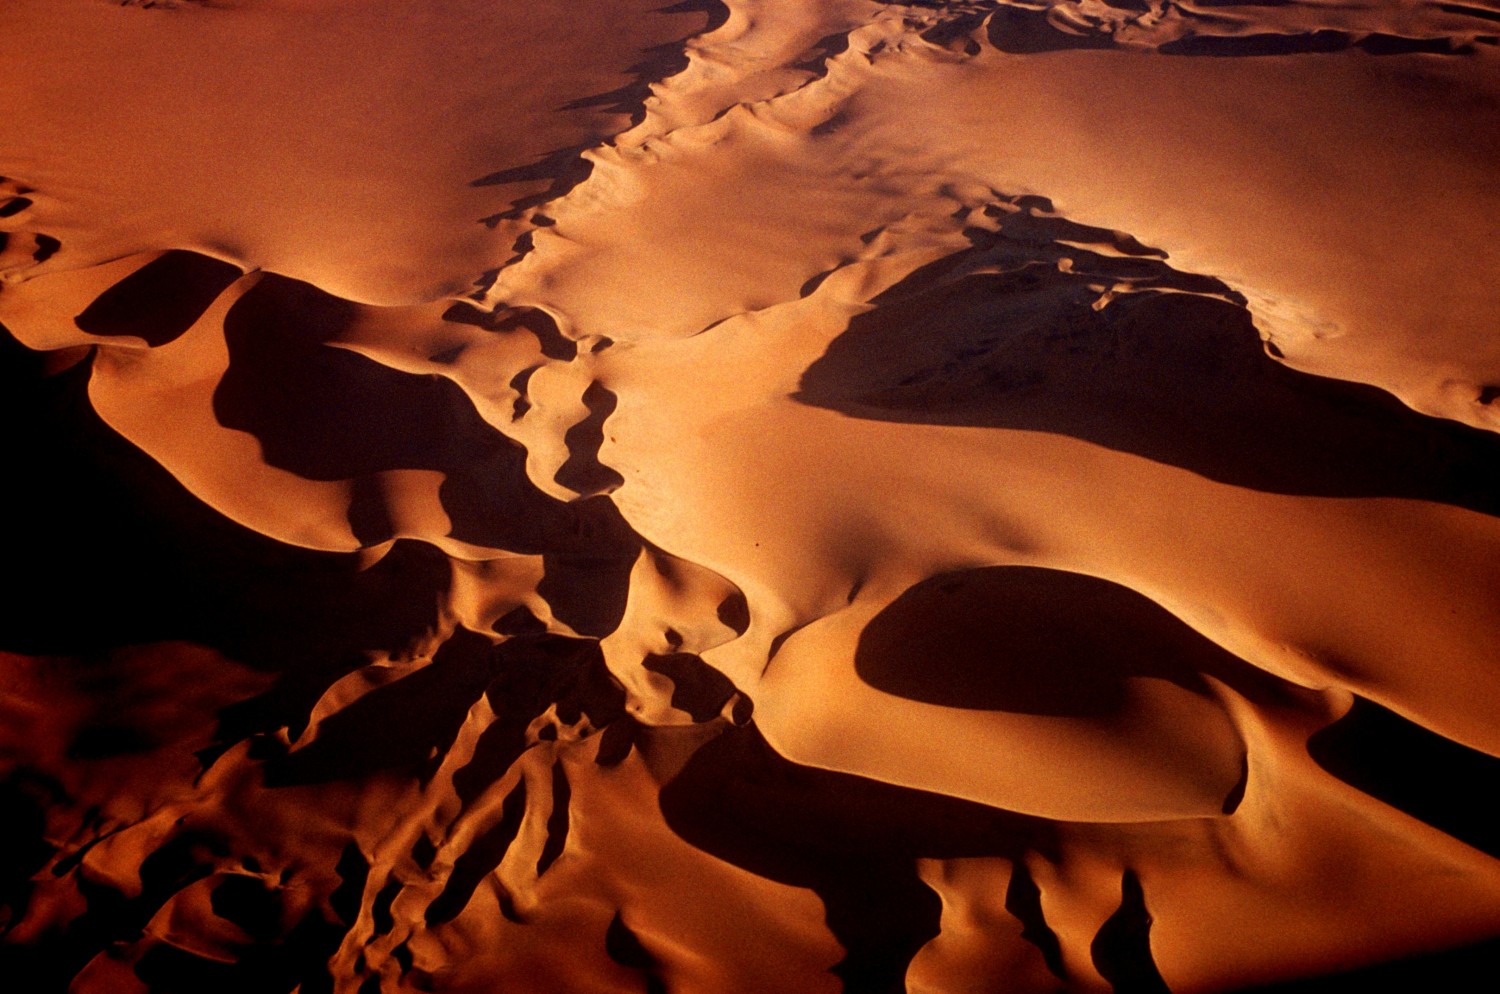 Part 1 - The Namib Desert